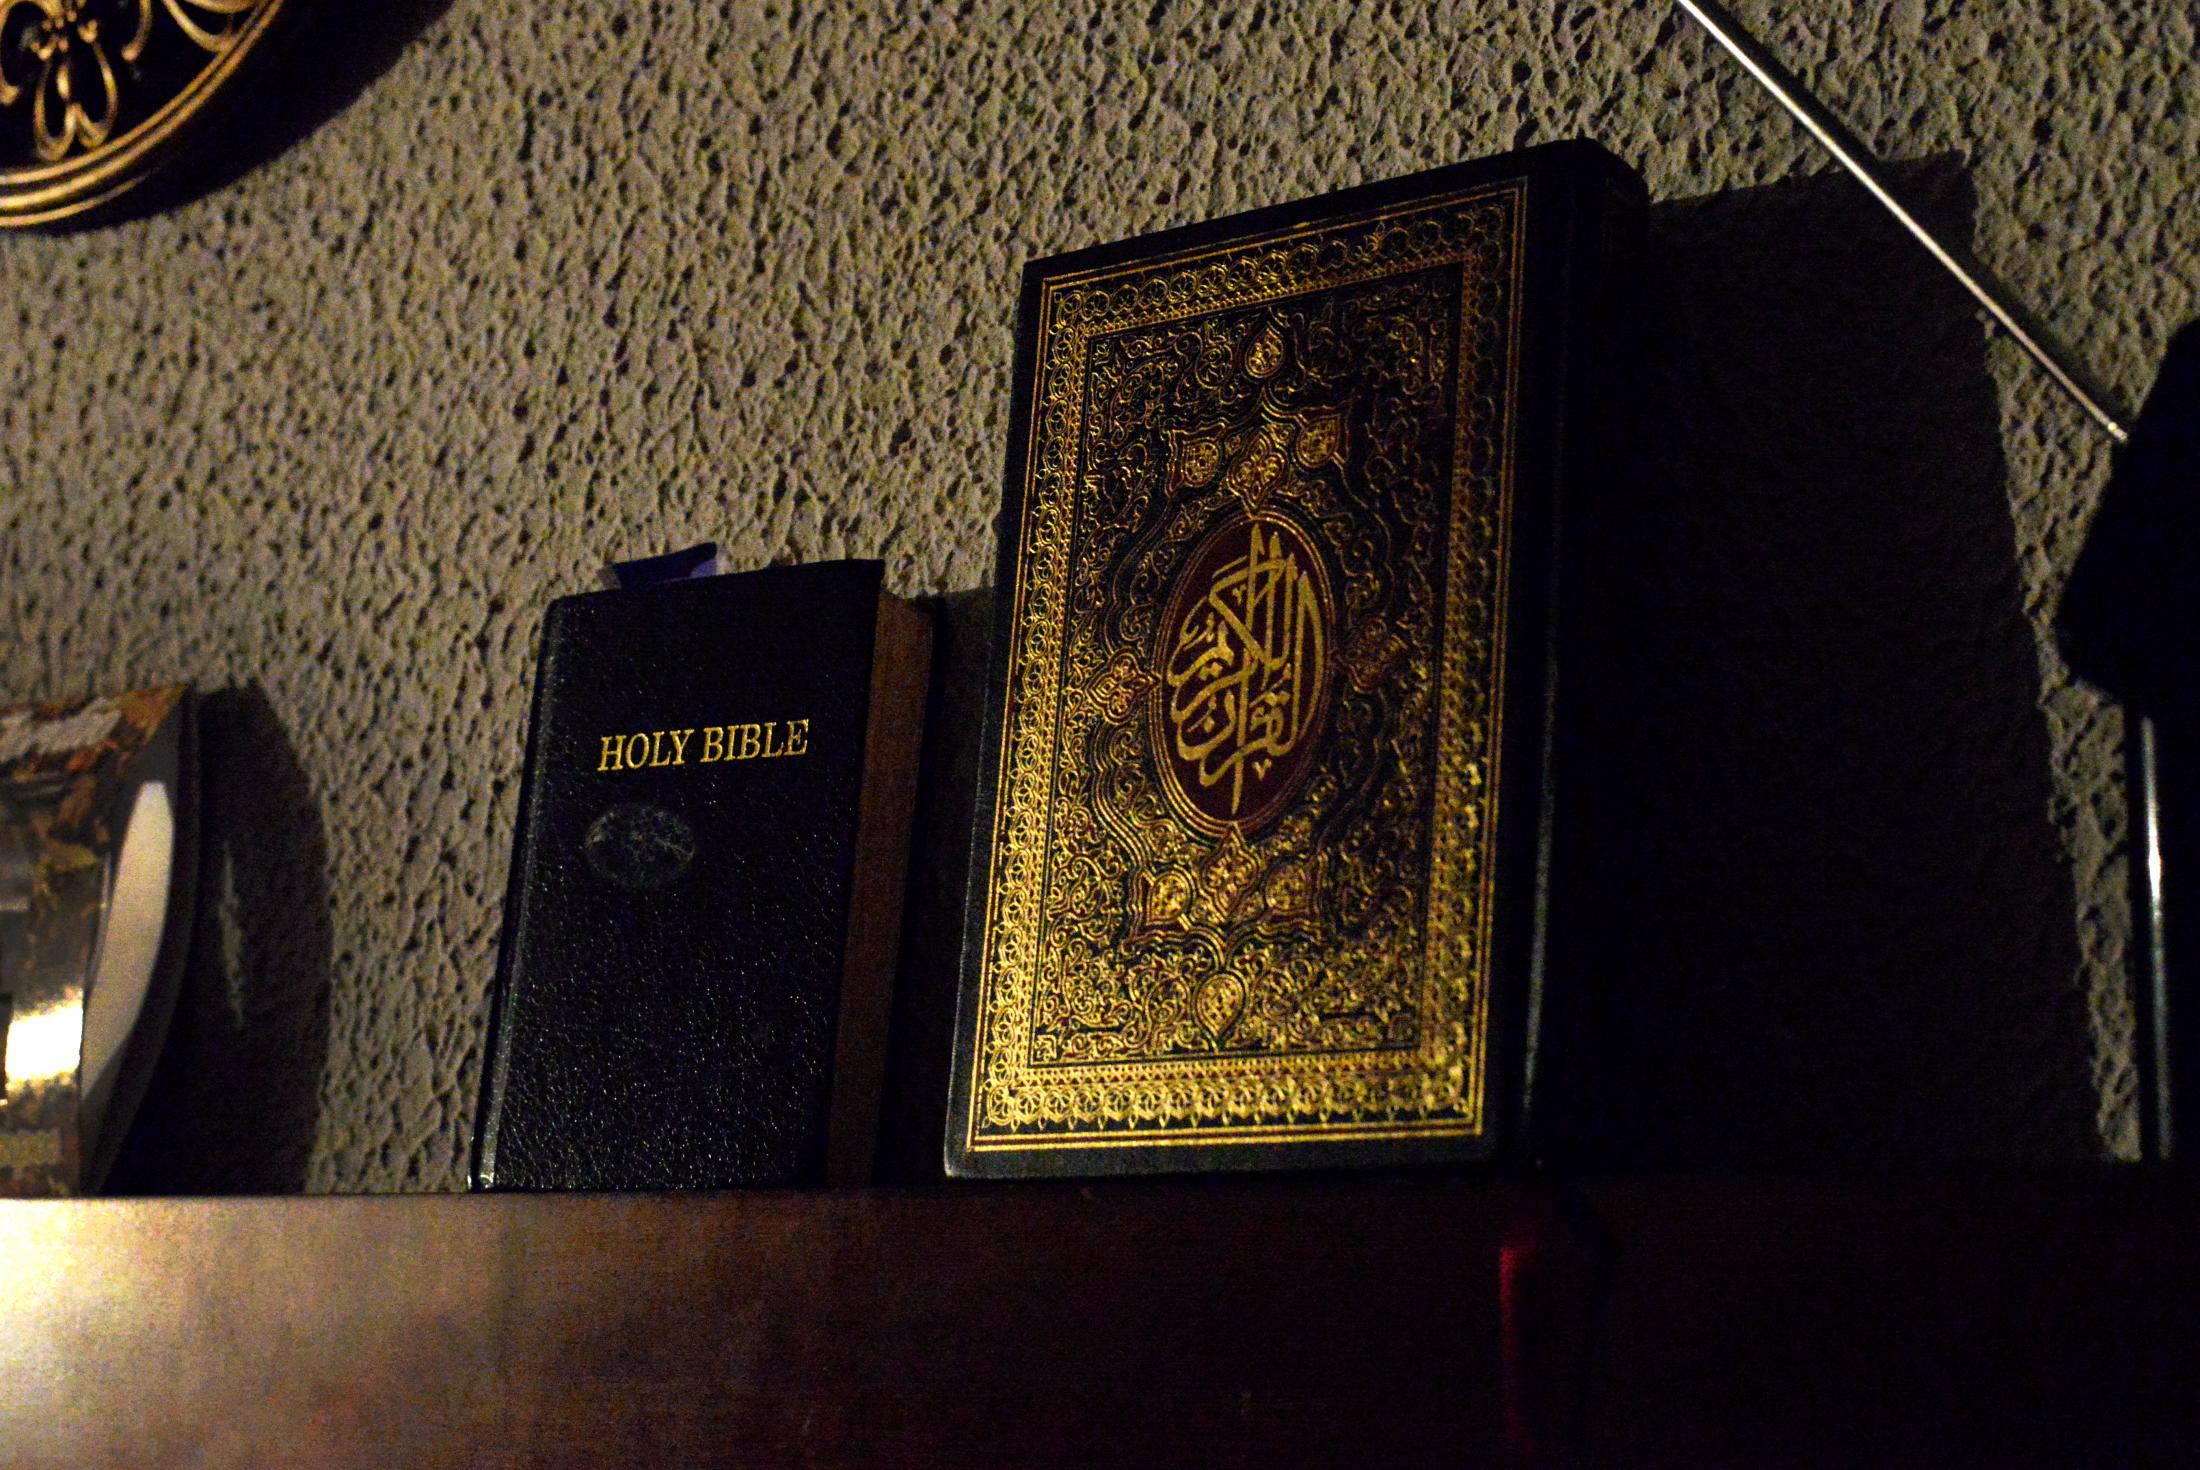 In Between Cultures - A Bible lies next to a Quran at Rama AlOmari’s home...